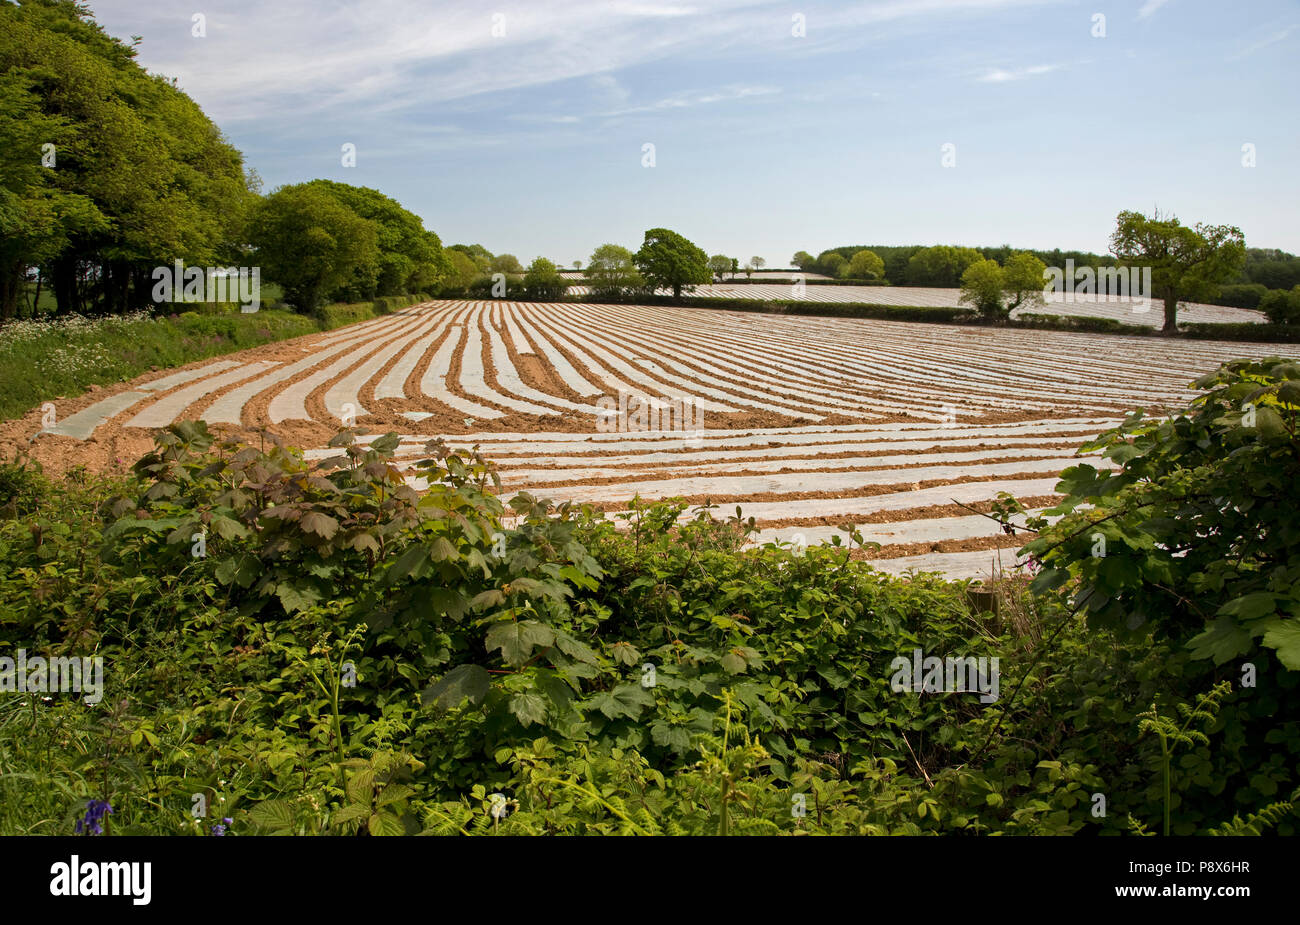 Acres of plastic covering growing potatoes Devon UK Stock Photo